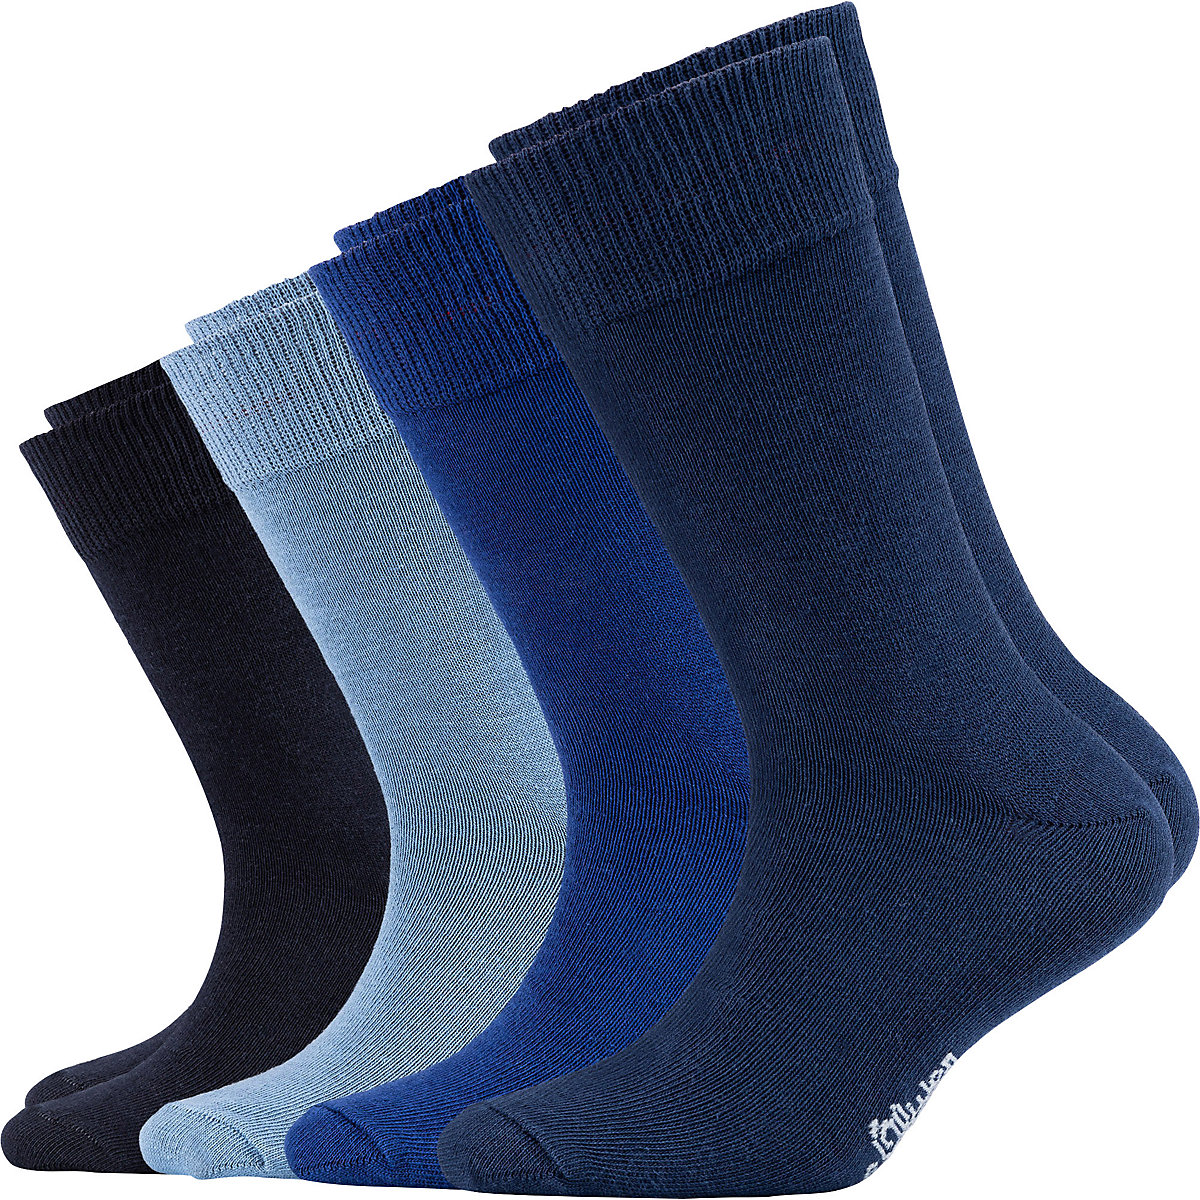 s.Oliver Kinder-Socken 4 Paar Baumwolle dunkelblau